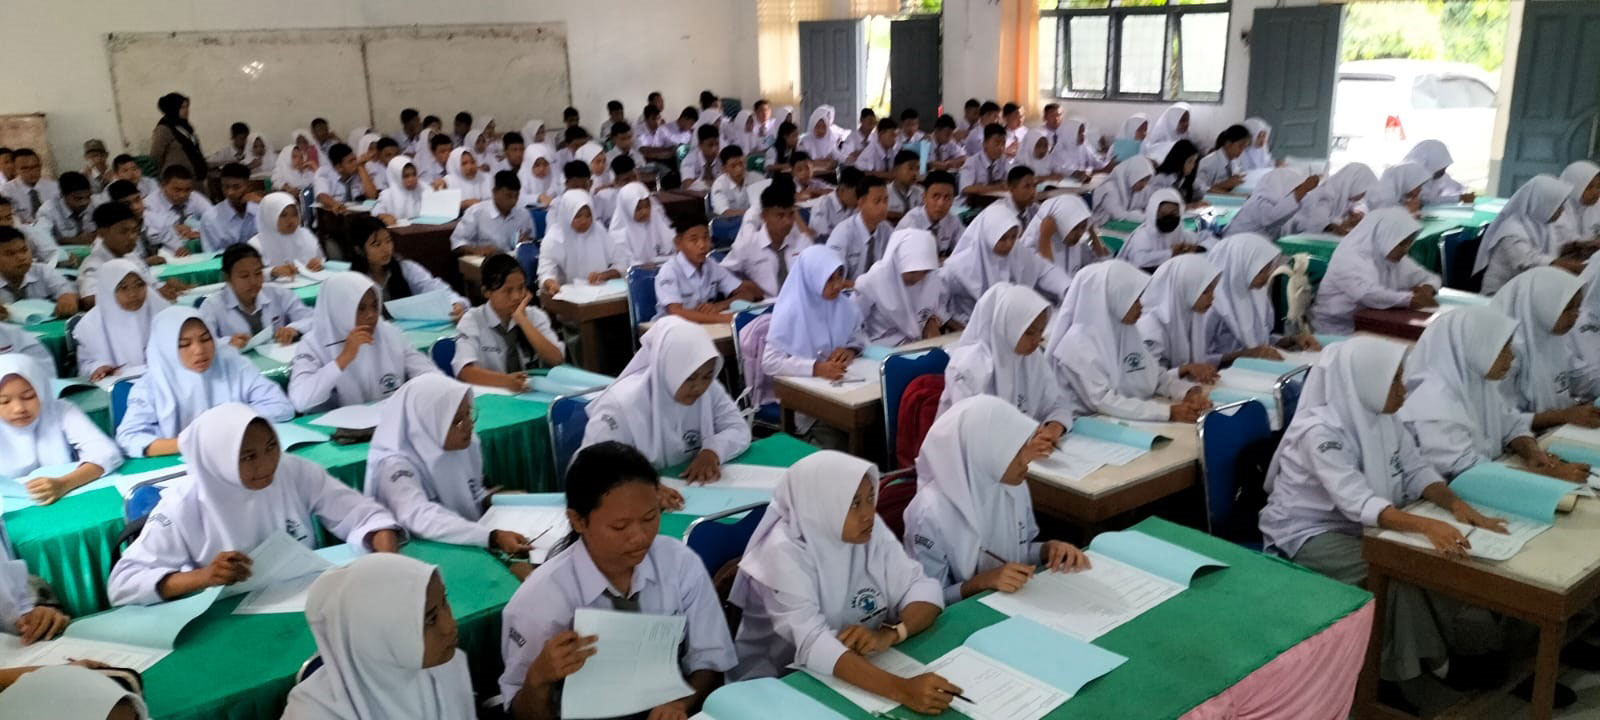 Tes Minat Bakat Massal untuk Sekolah SMP dan SMA